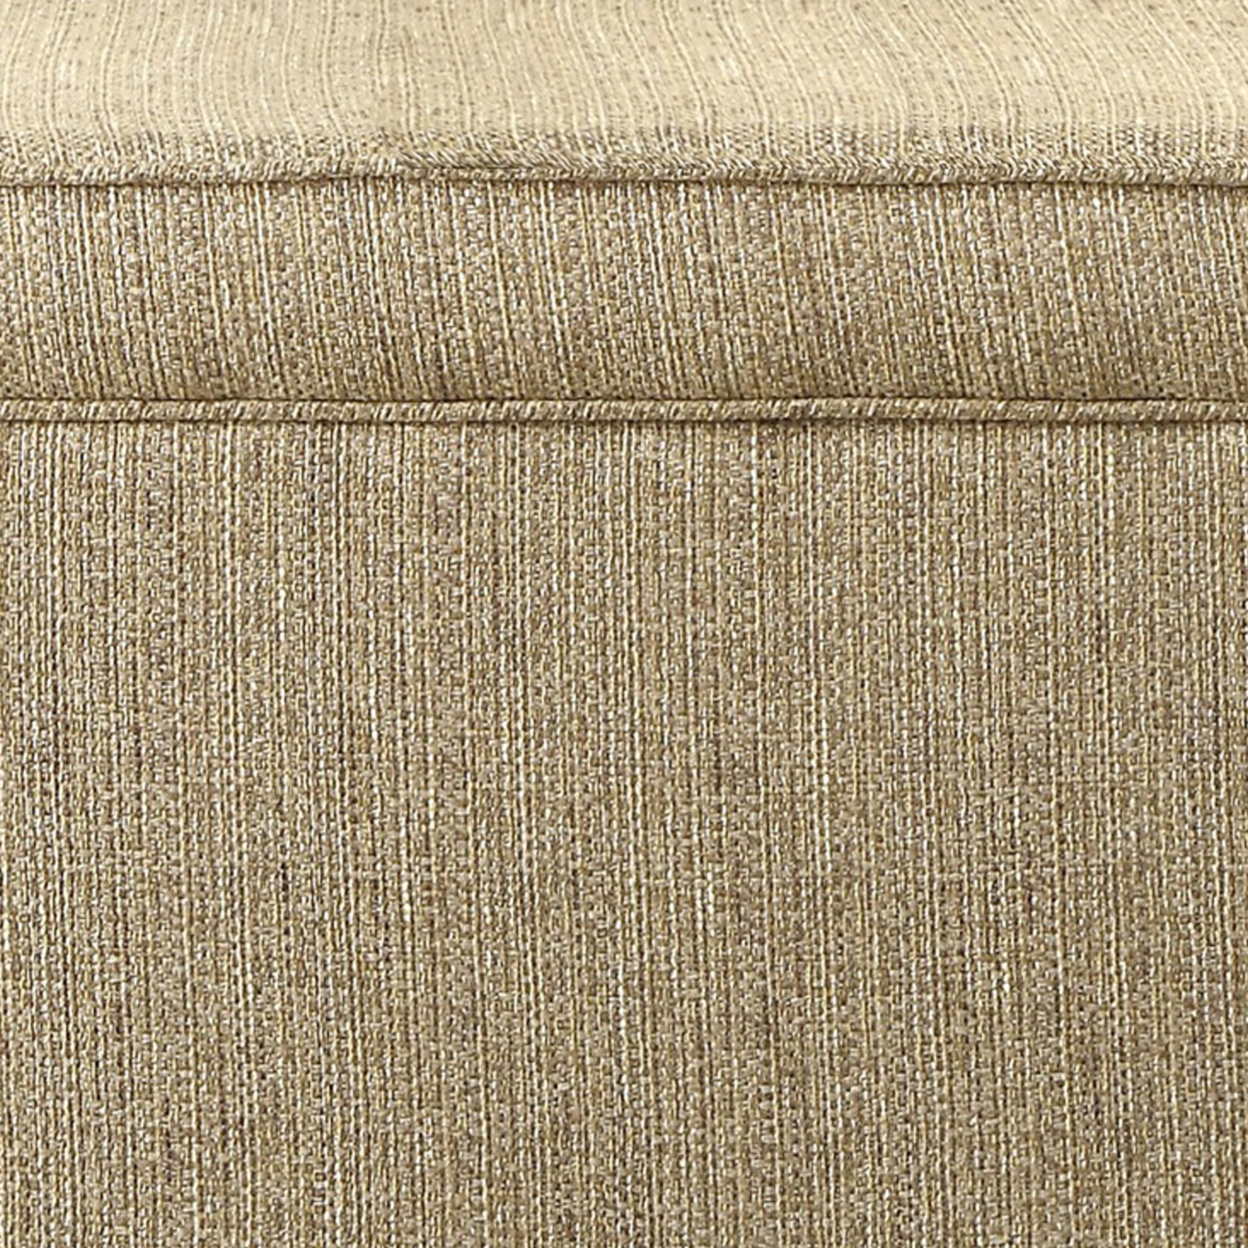 Rectangular Fabric Upholstered Wooden Ottoman With Lift Top Storage, Brown- Saltoro Sherpi